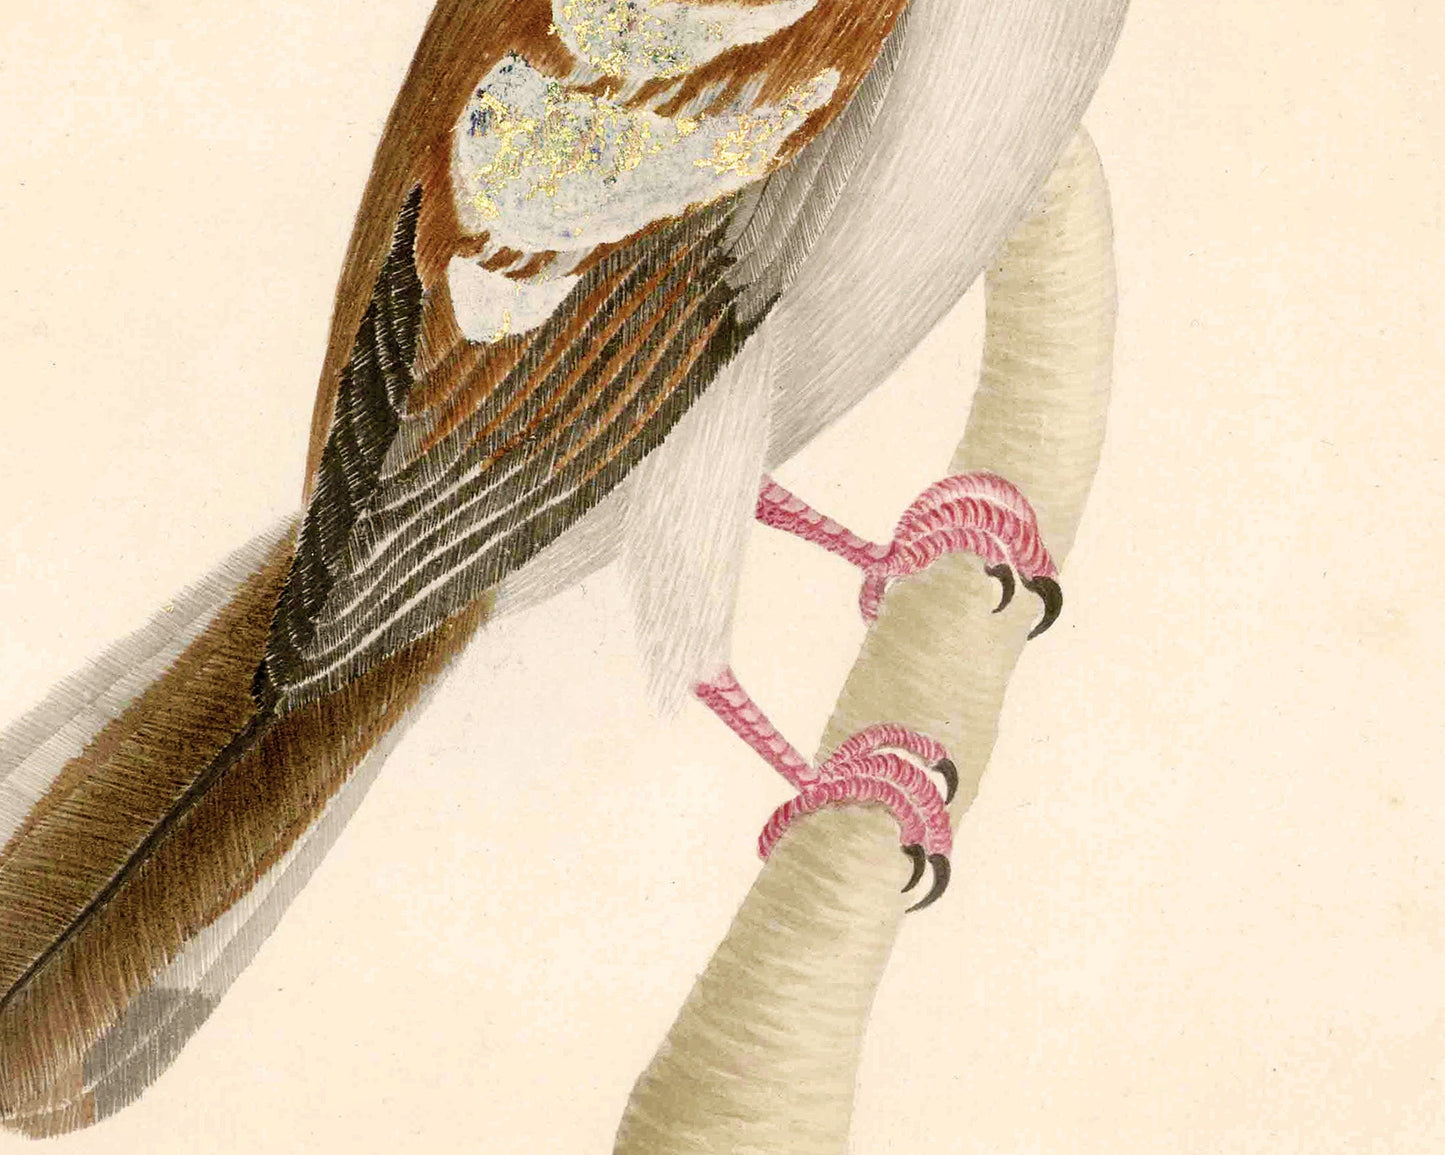 Antique bird art | Pink talons | 18th century bird illustration | Natural history print | Animal décor | Modern vintage | Eco-friendly gift